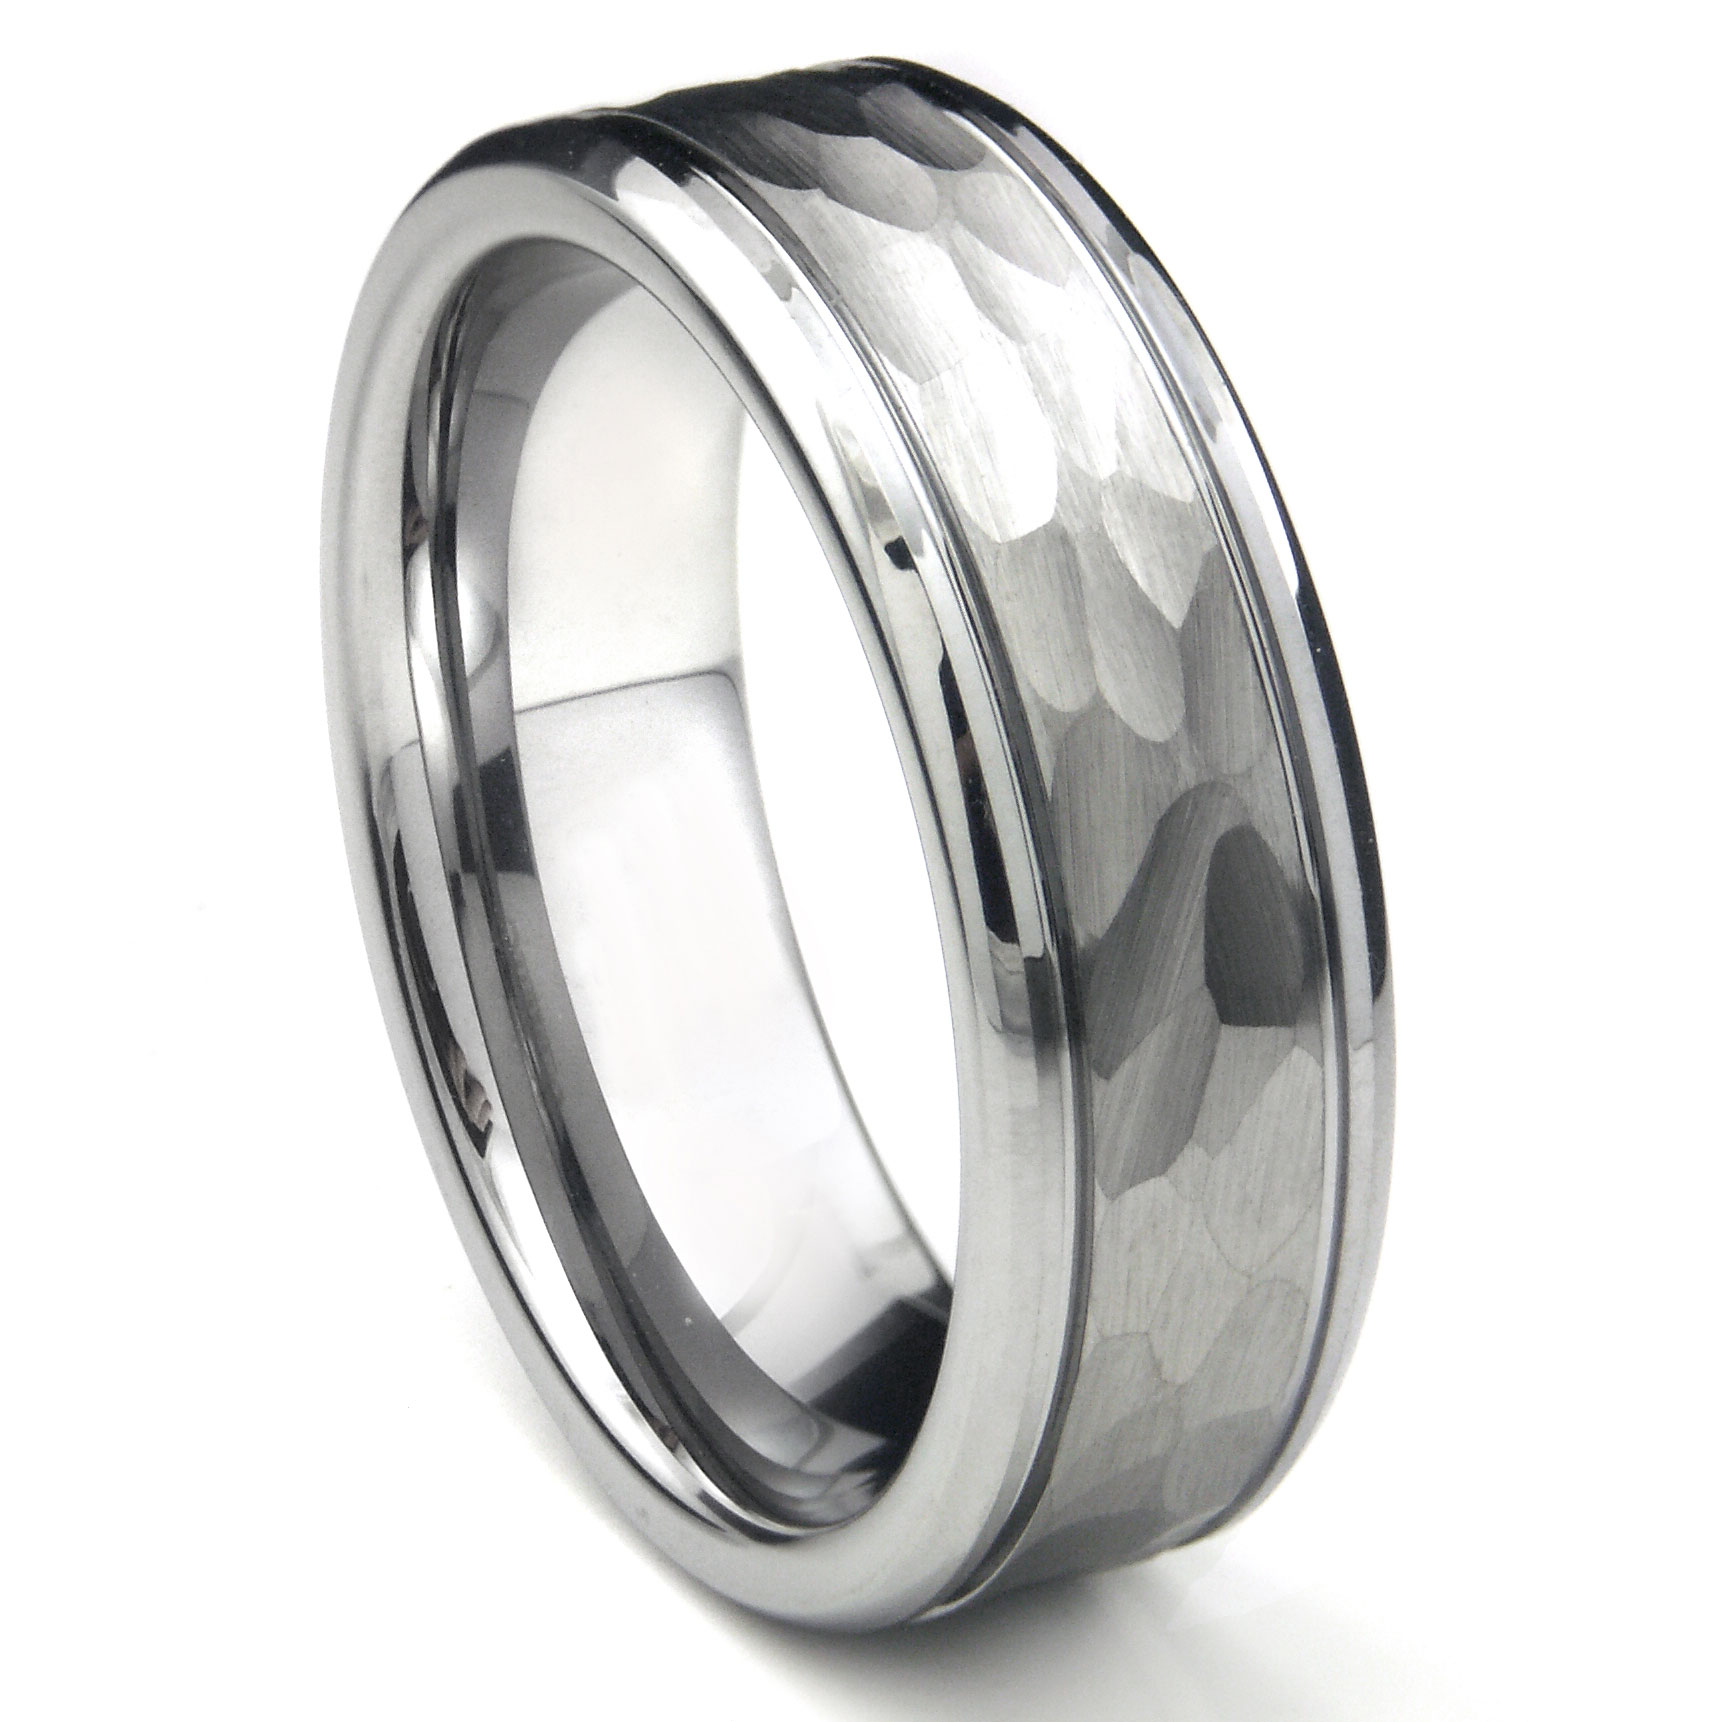 HAMMER FINISH WEDDING BAND Stainless Steel Ring SIZES 6-13 